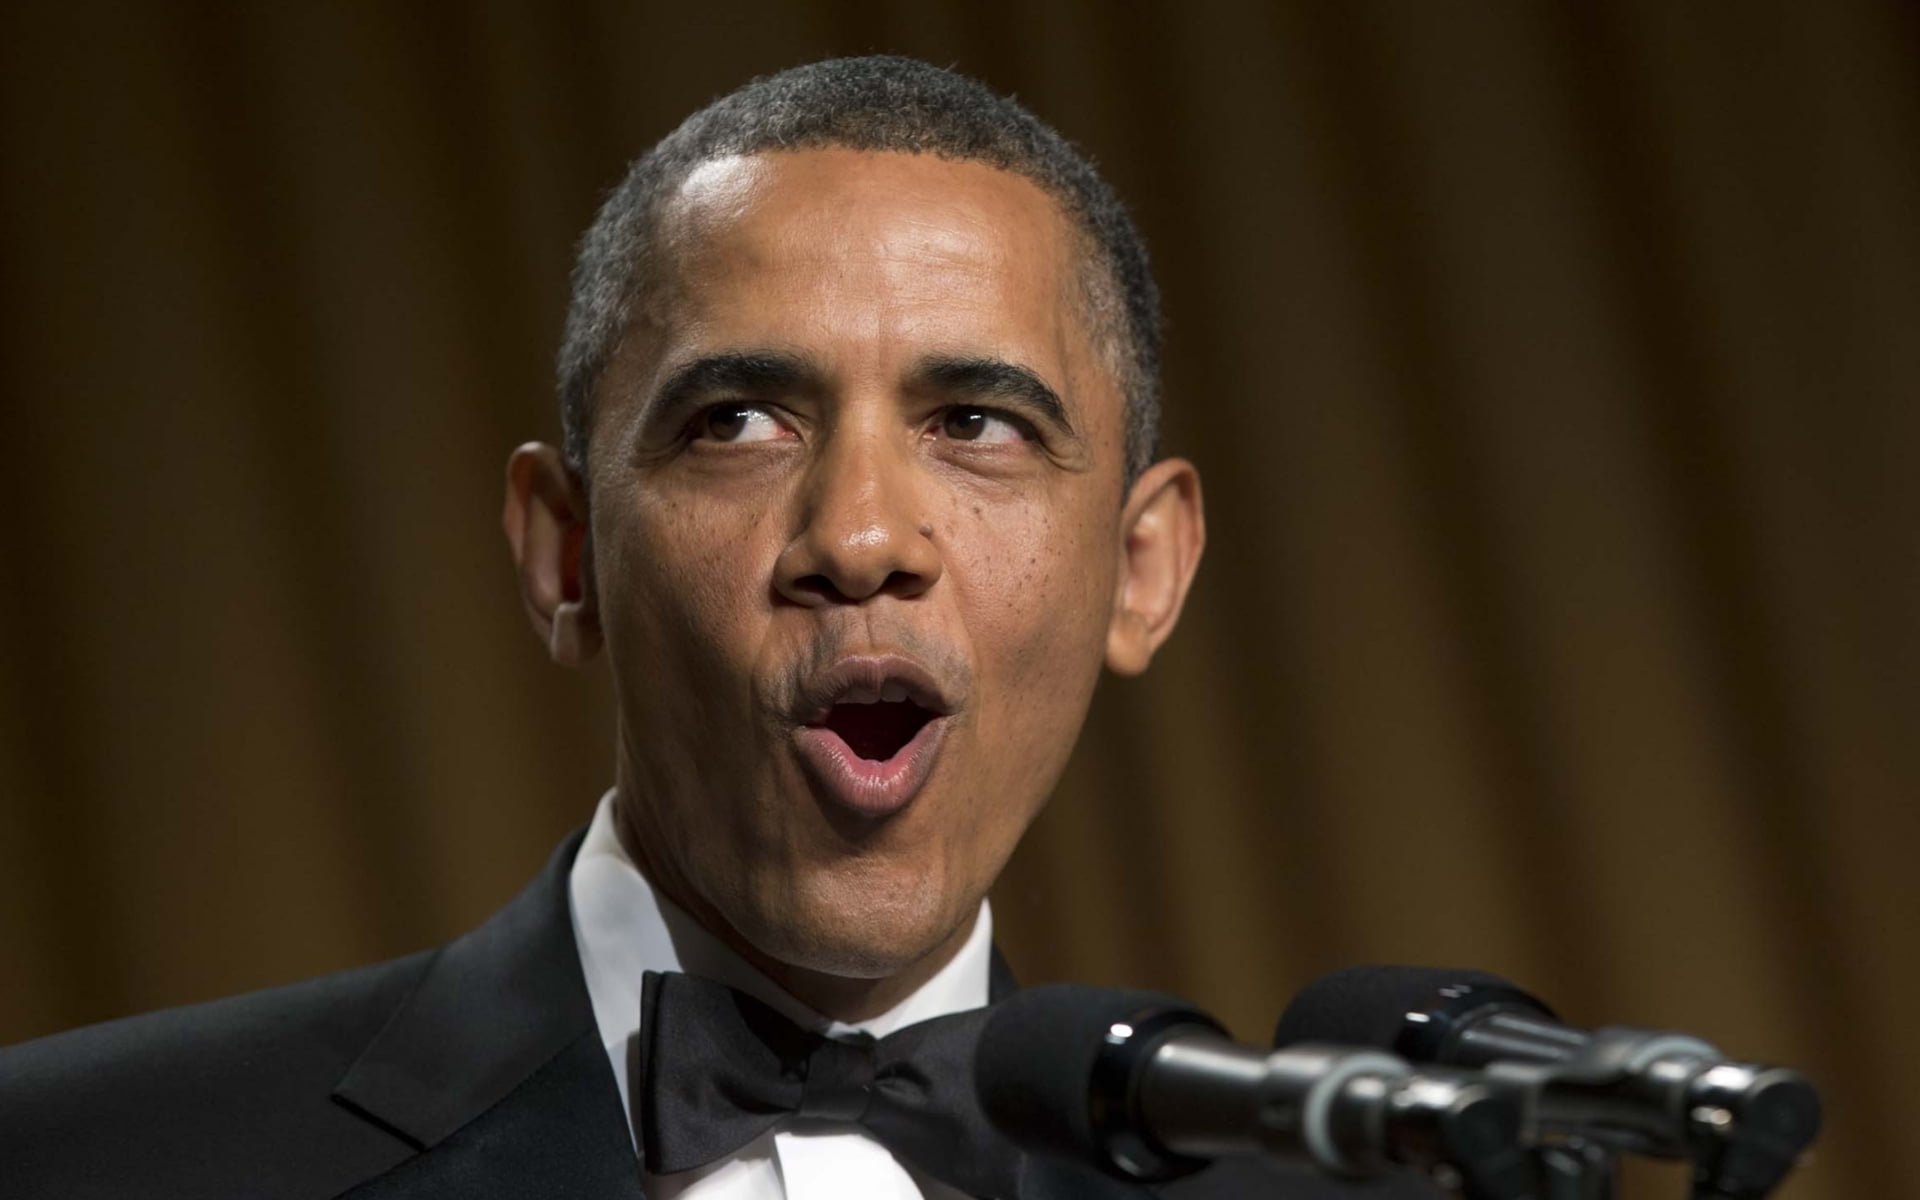 Barack Obama, face, background, USA, the President.USA, men, people